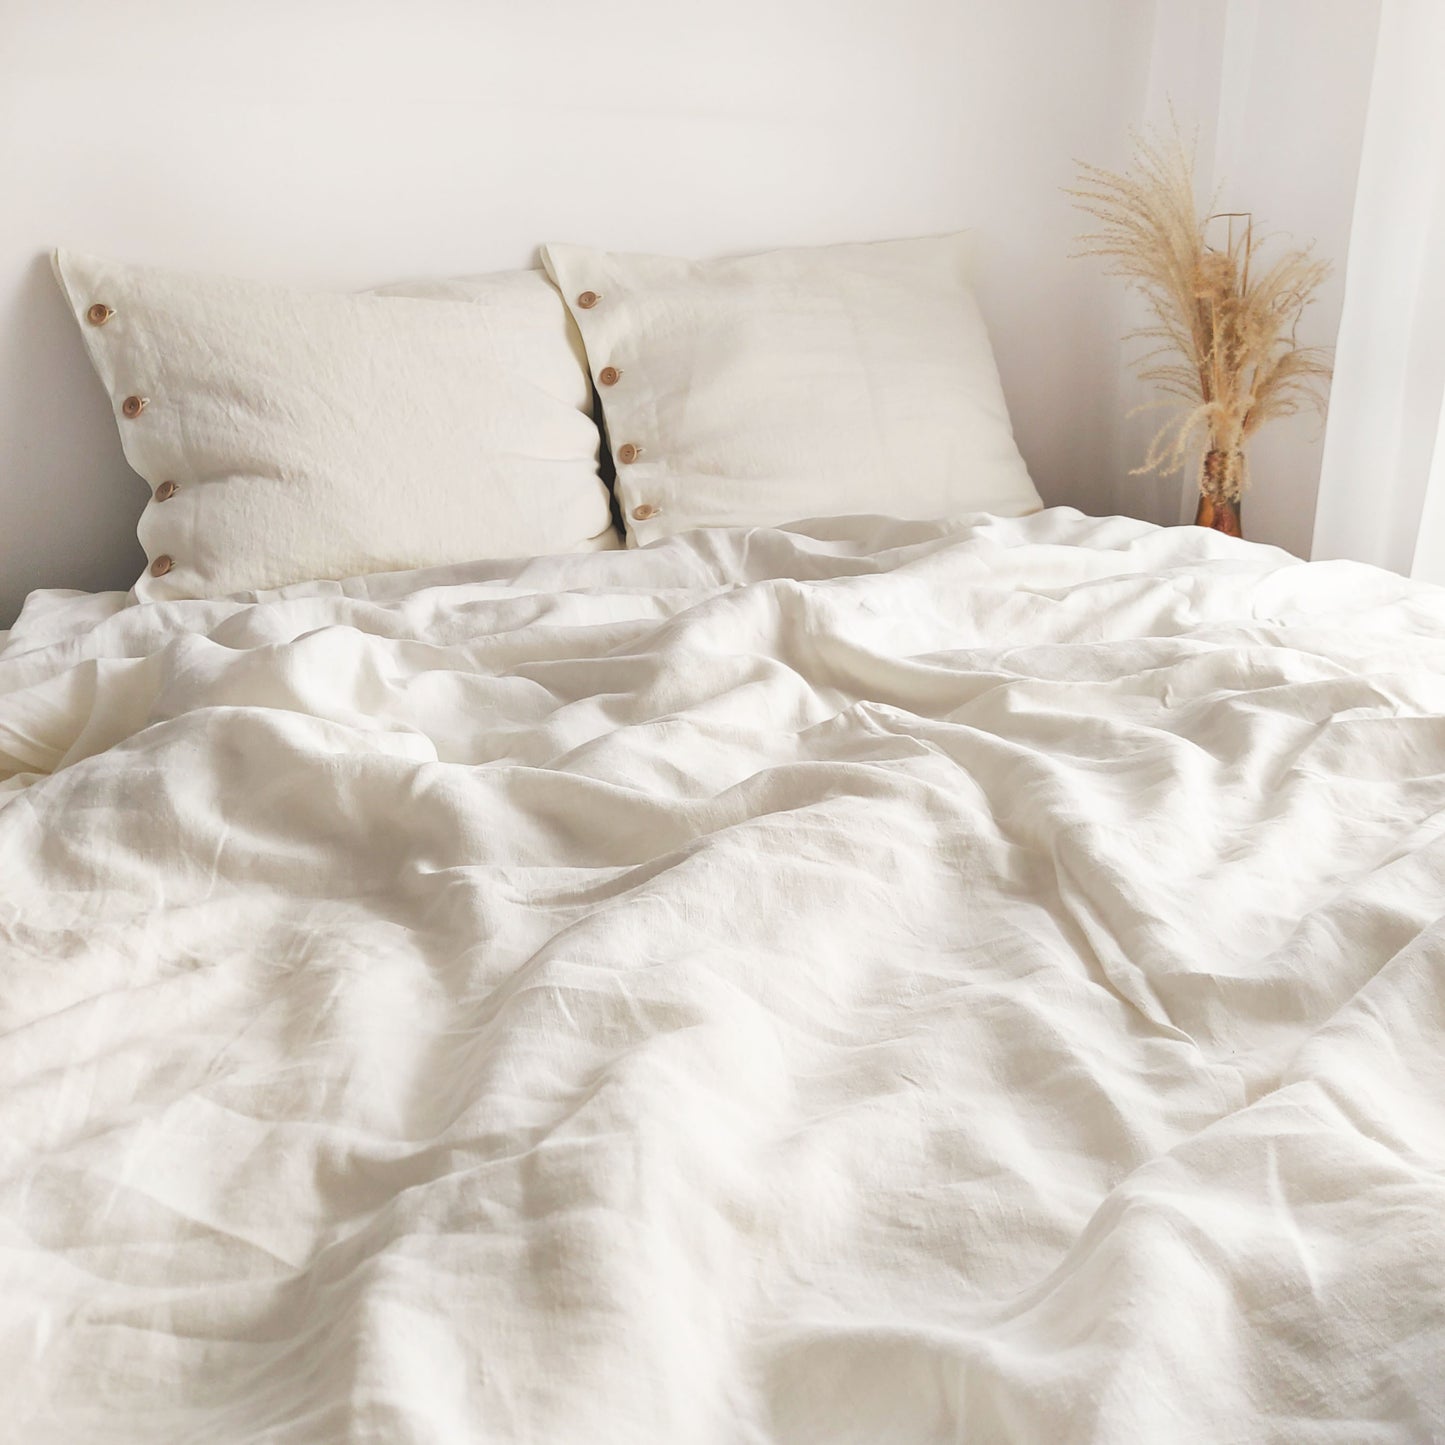 Linen bedding set, linen pillow cover, pillow cover with buttons 